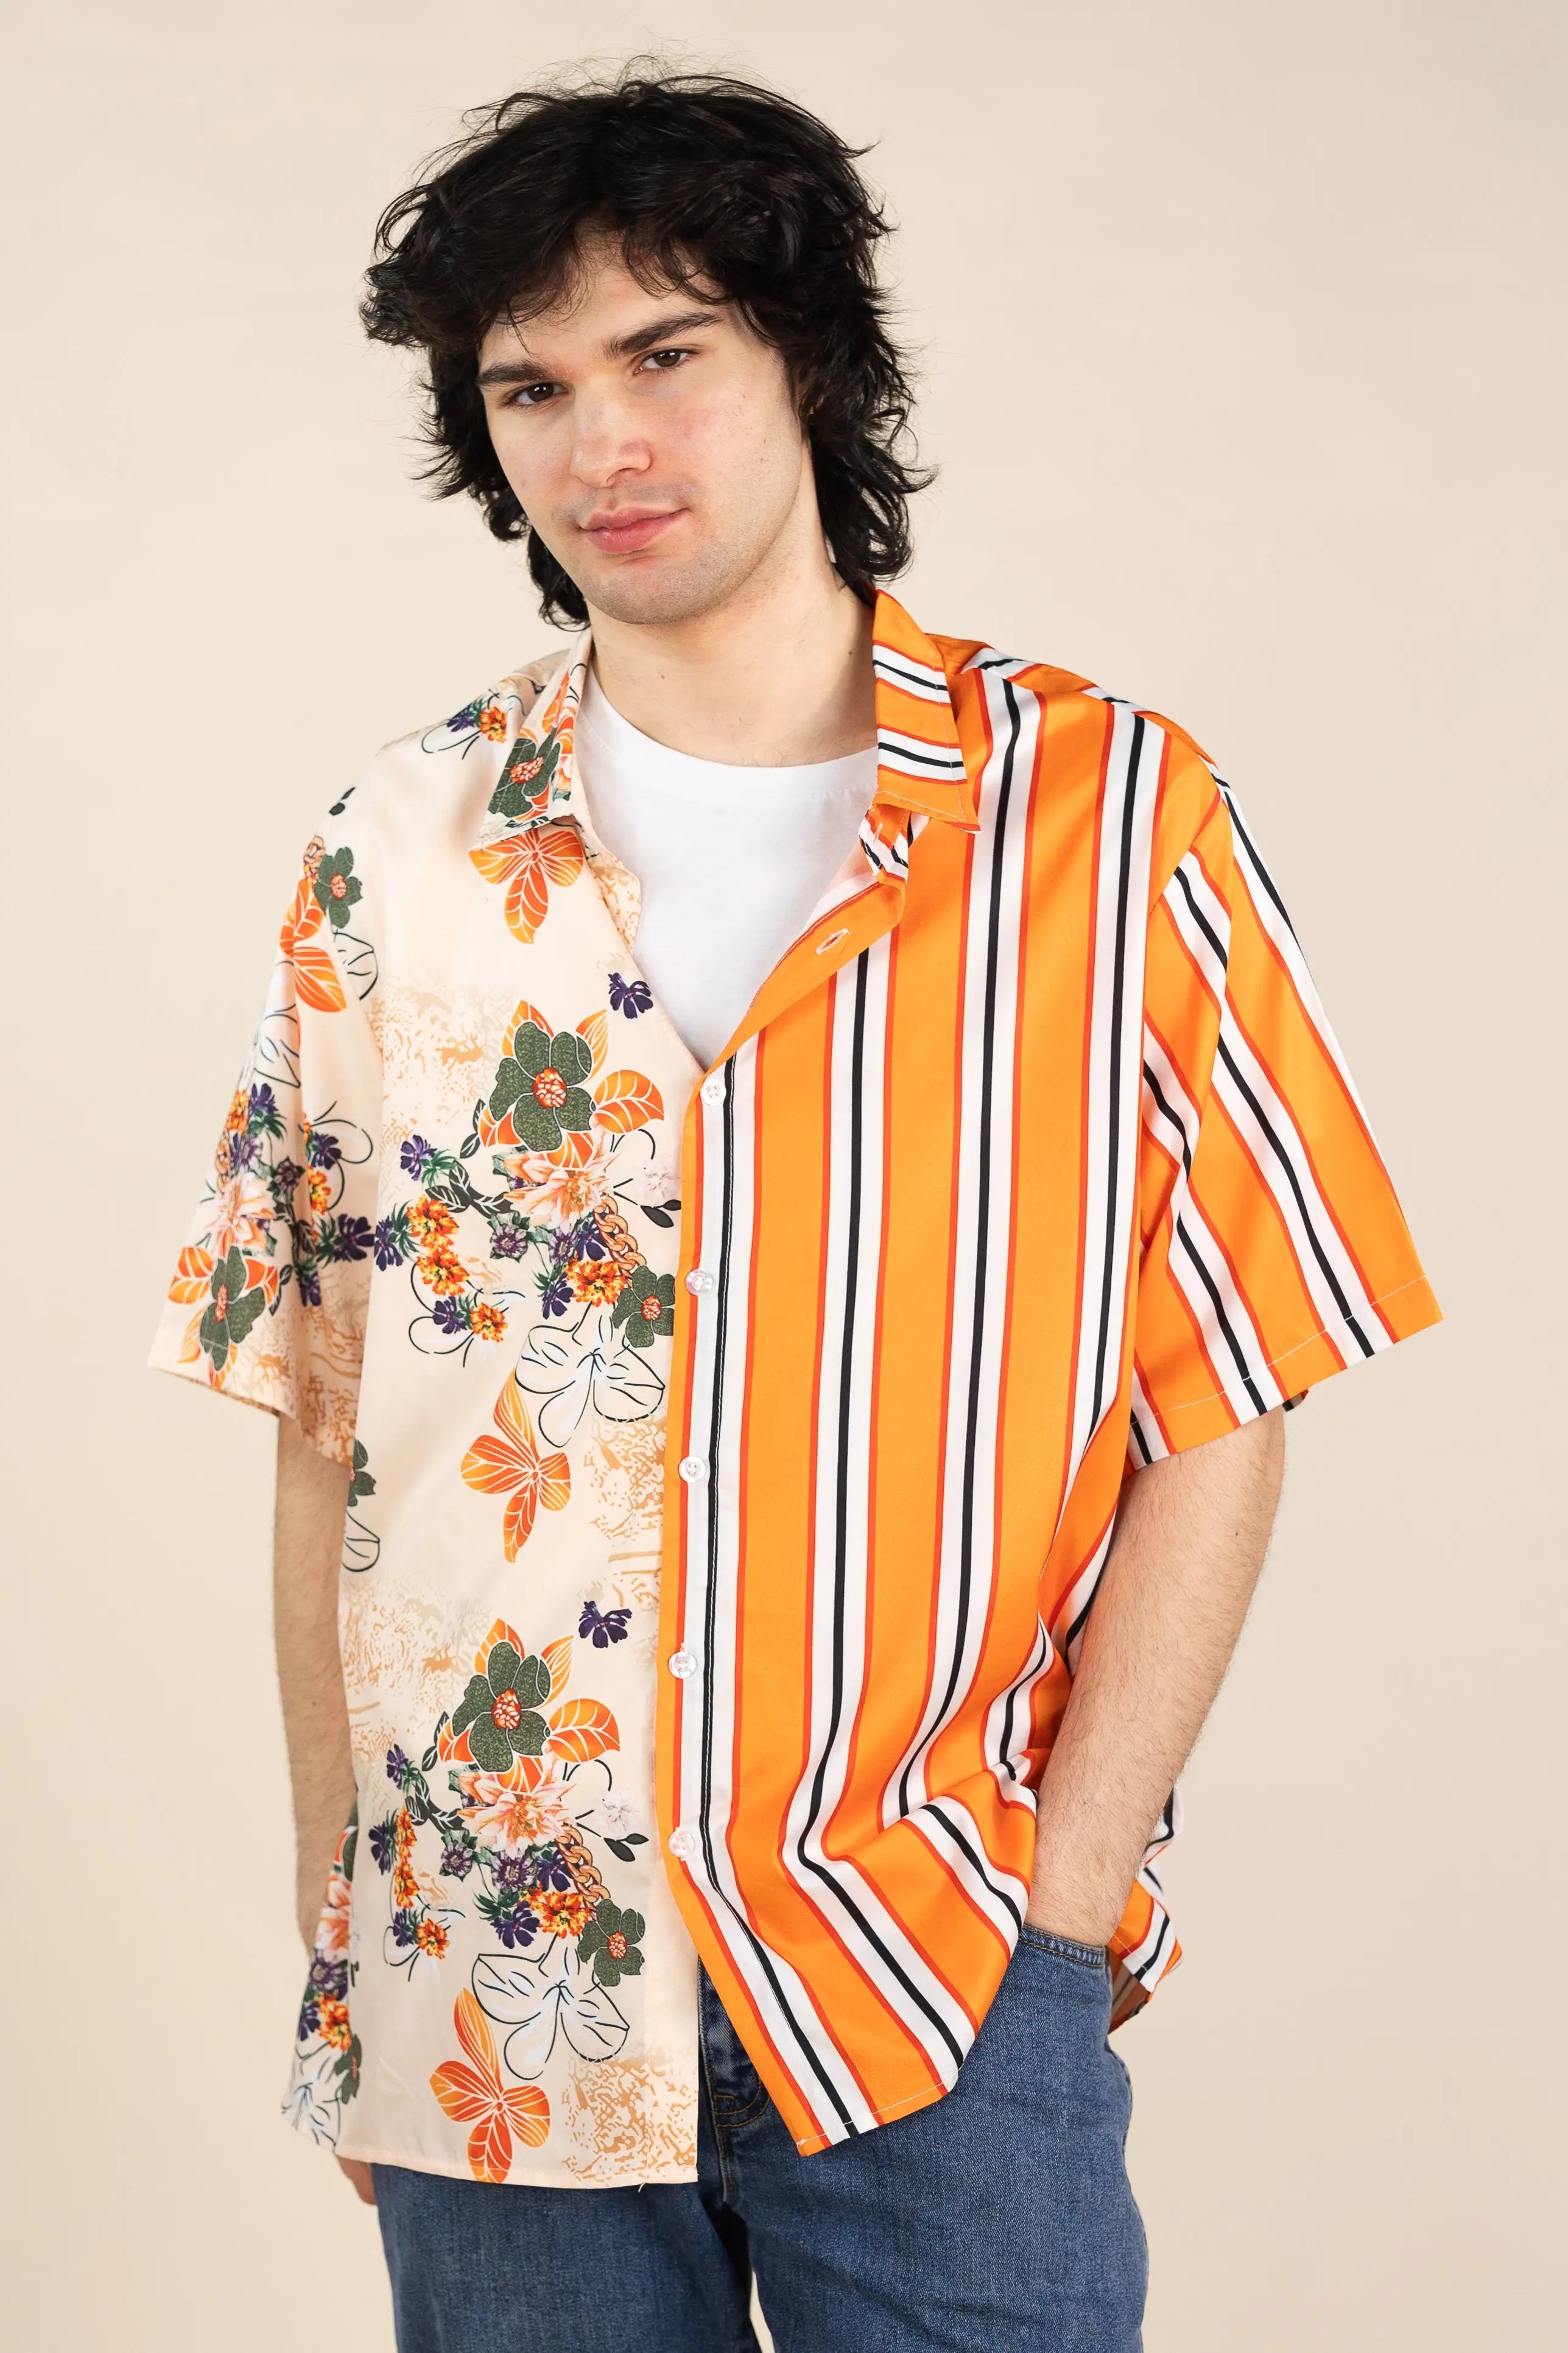 CharmkpR - Hawaiian Shirt- ThriftTale.com - Vintage and second handclothing